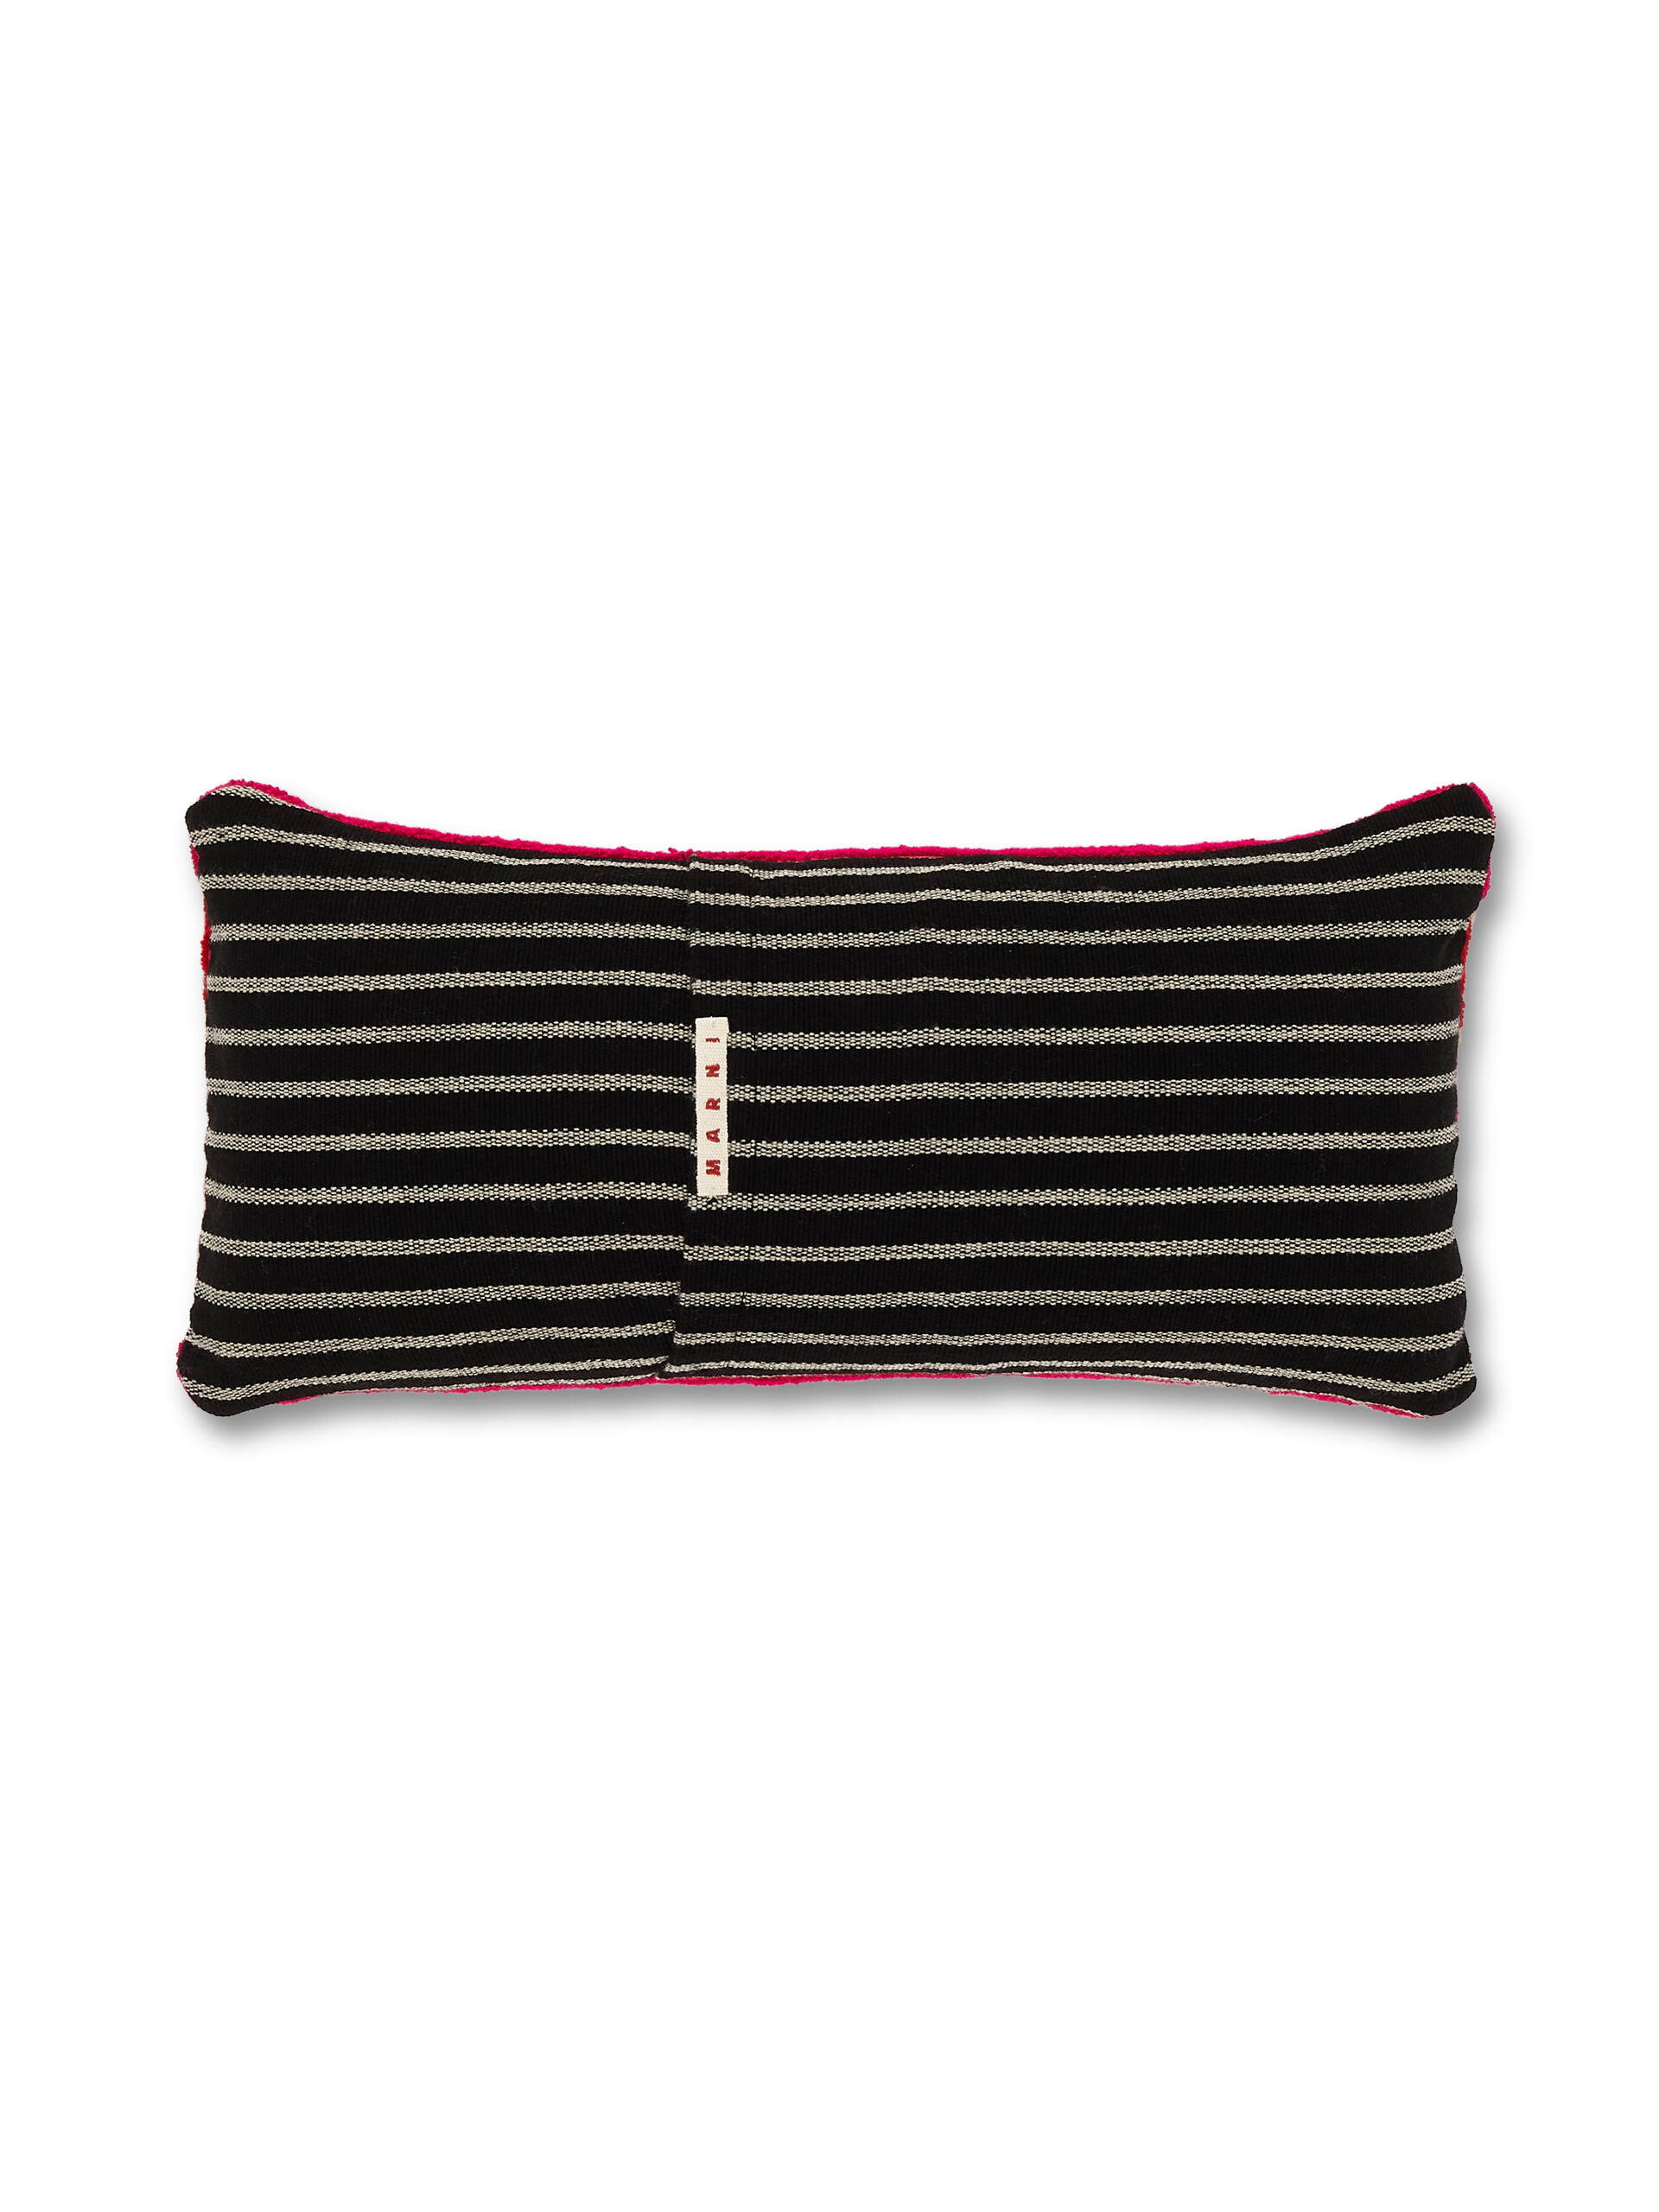 MARNI MARKET cushion in multicolor pink fabric - Furniture - Image 2